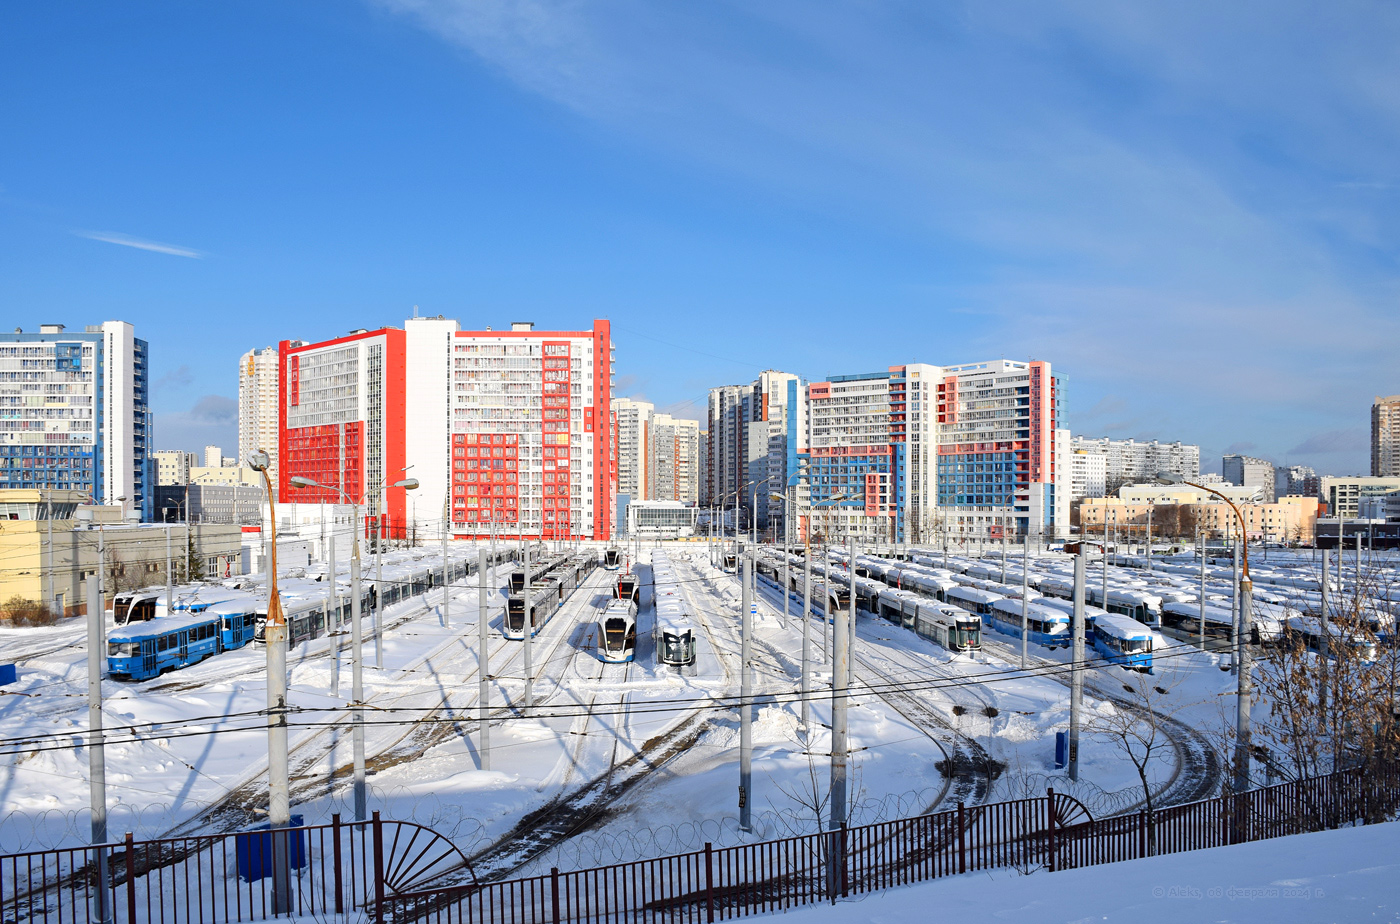 Moskau — Tram depots: [3] Krasnopresnenskoye. New site in Strogino; Moskau — Views from a height